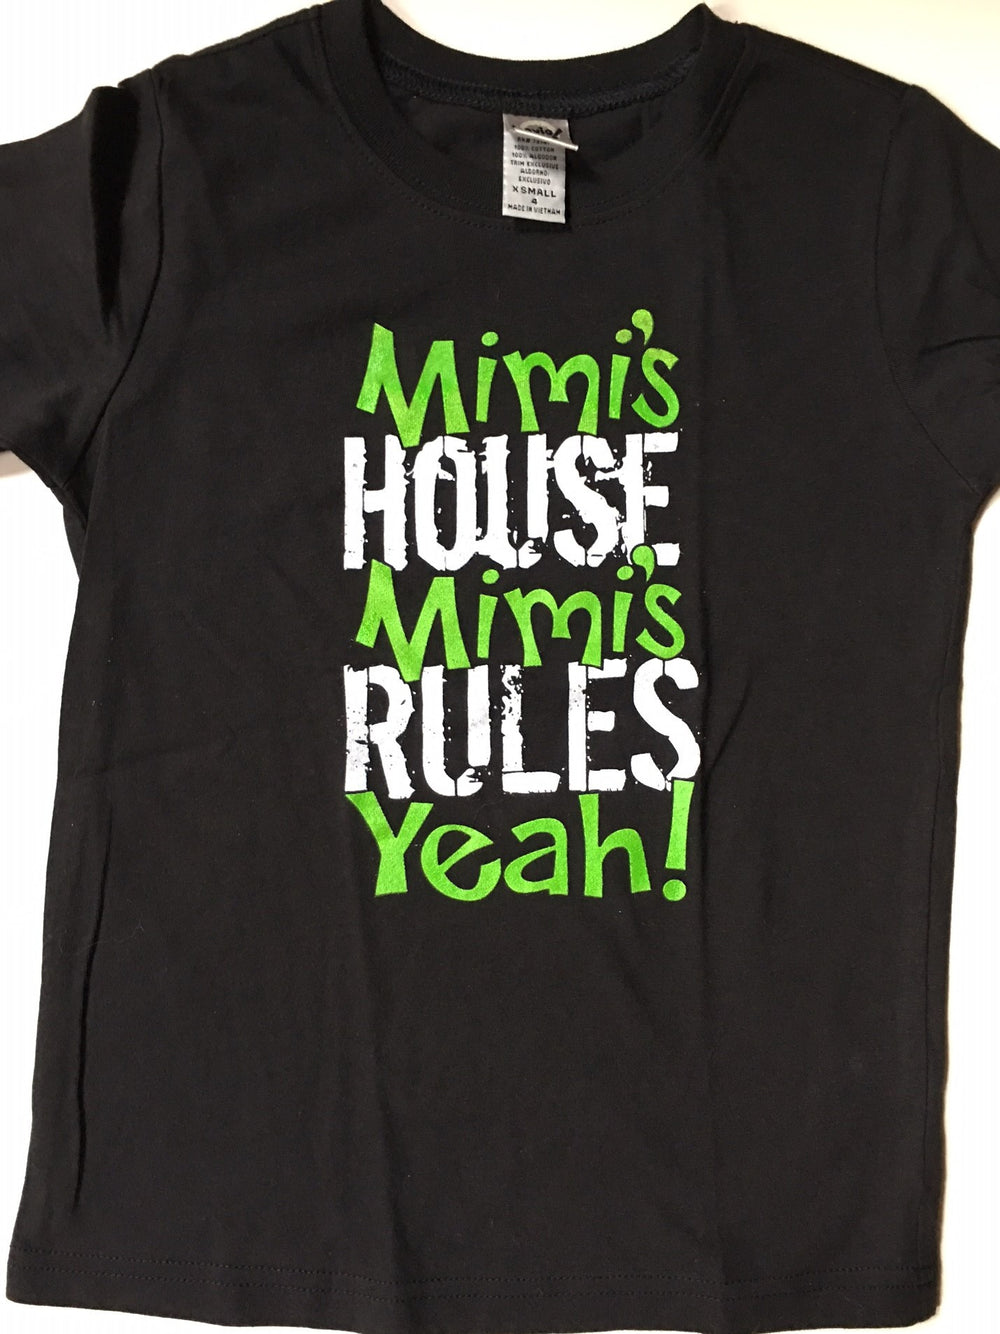 MIMI'S HOUSE MIMI'S RULES - YEAH T-SHIRT